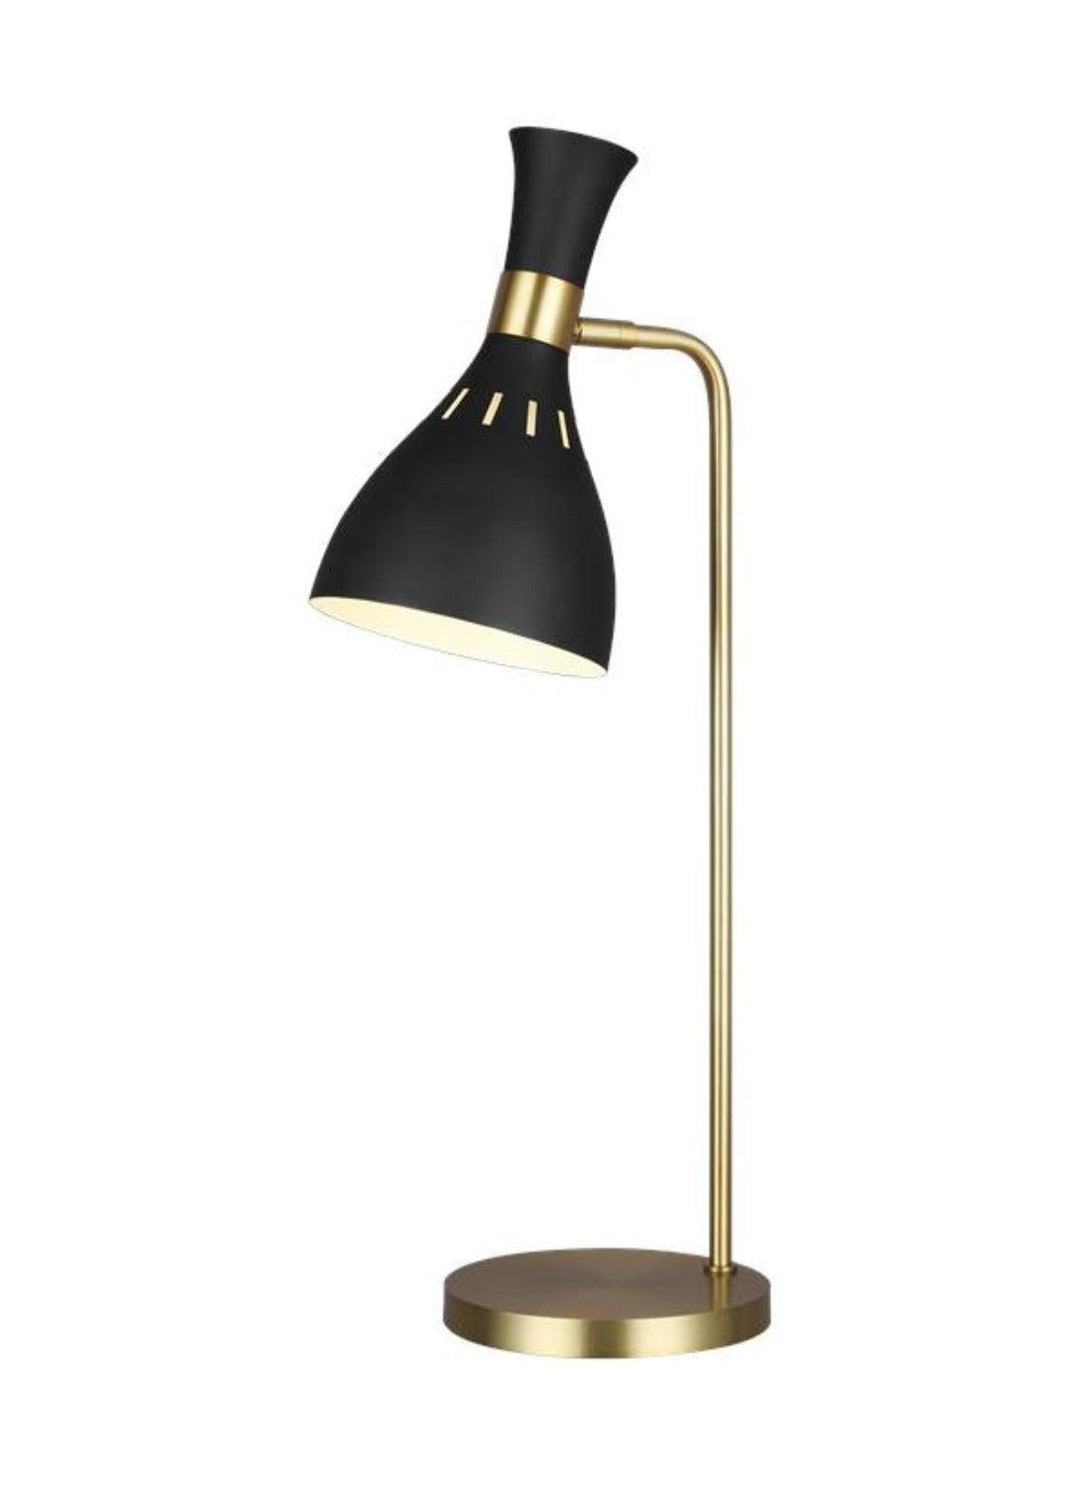 OWEN TASK LAMP (Floor Model *No Shipping)